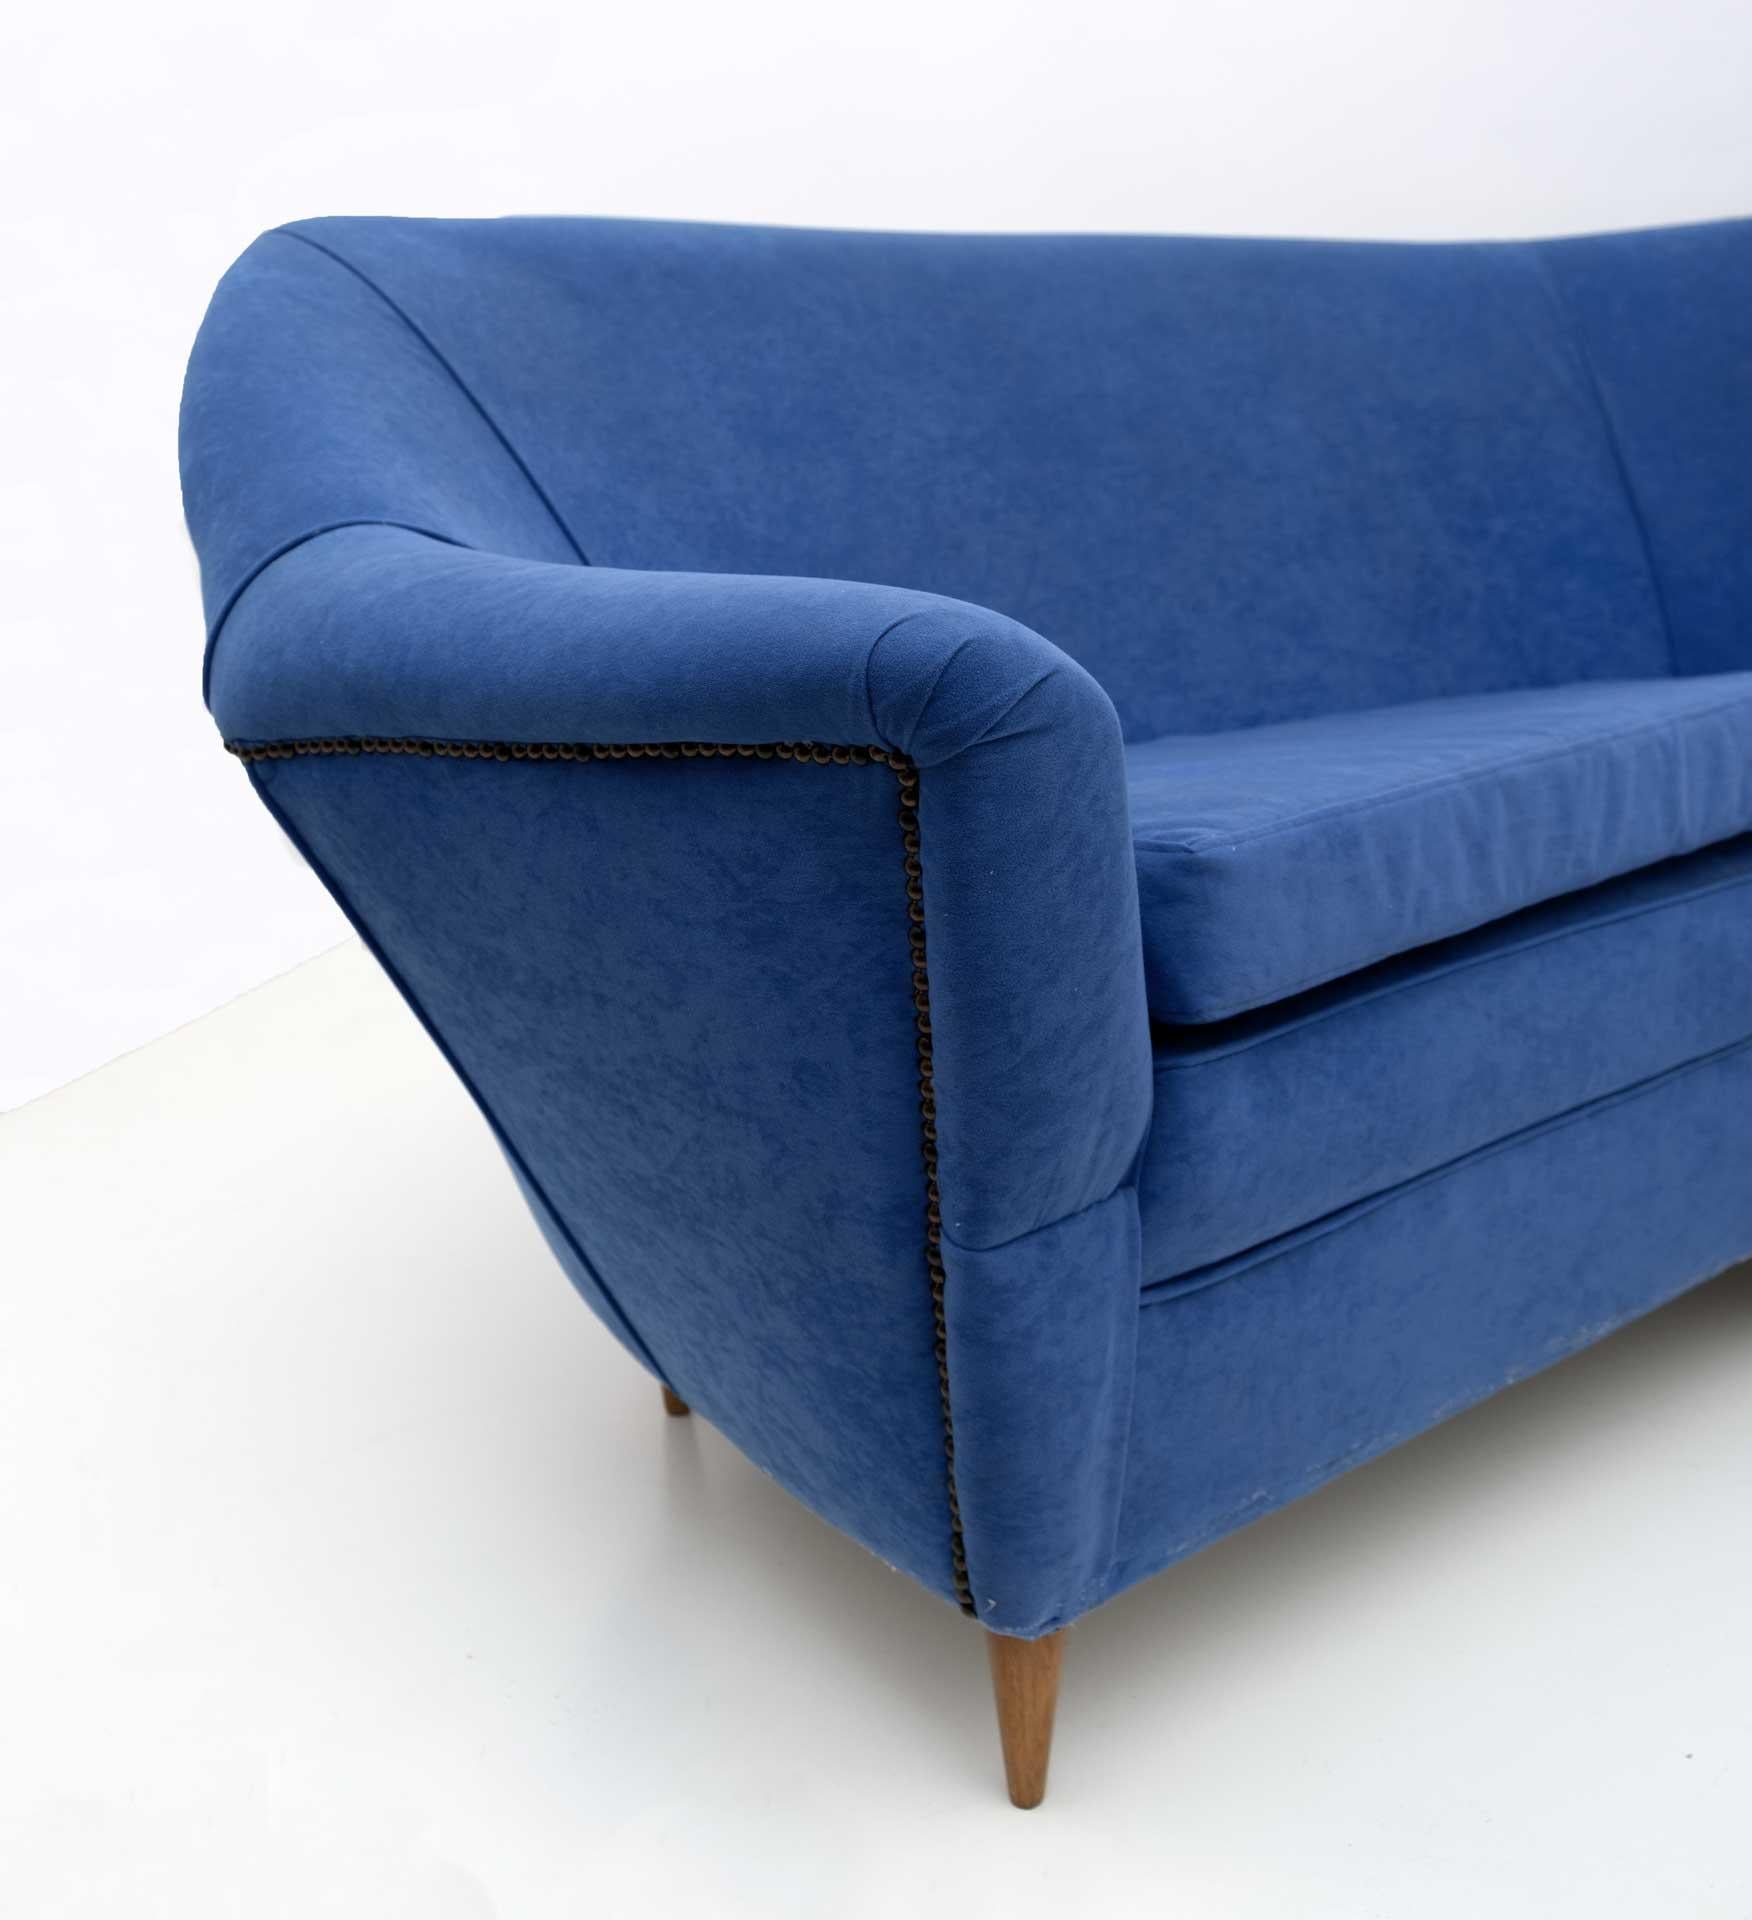 Ico Parisi Mid-Century Modern Italian Corner Sofa for Ariberto Colombo, 1950s For Sale 1